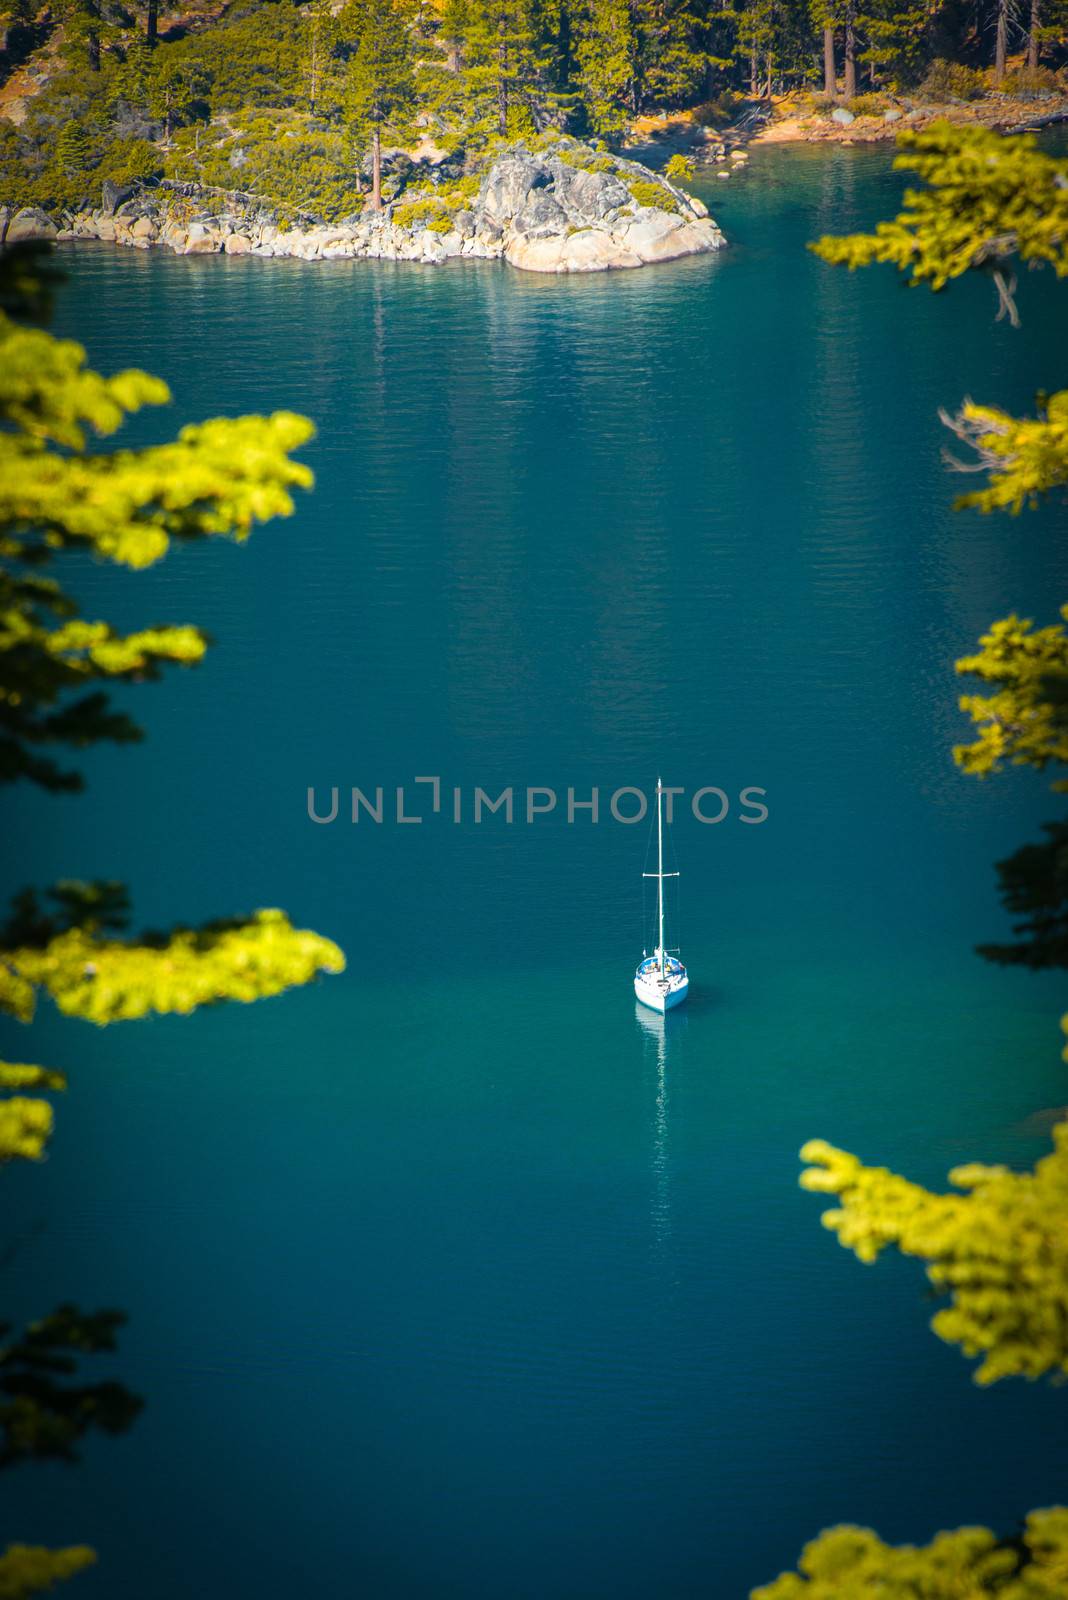 Boat in a lake by CelsoDiniz